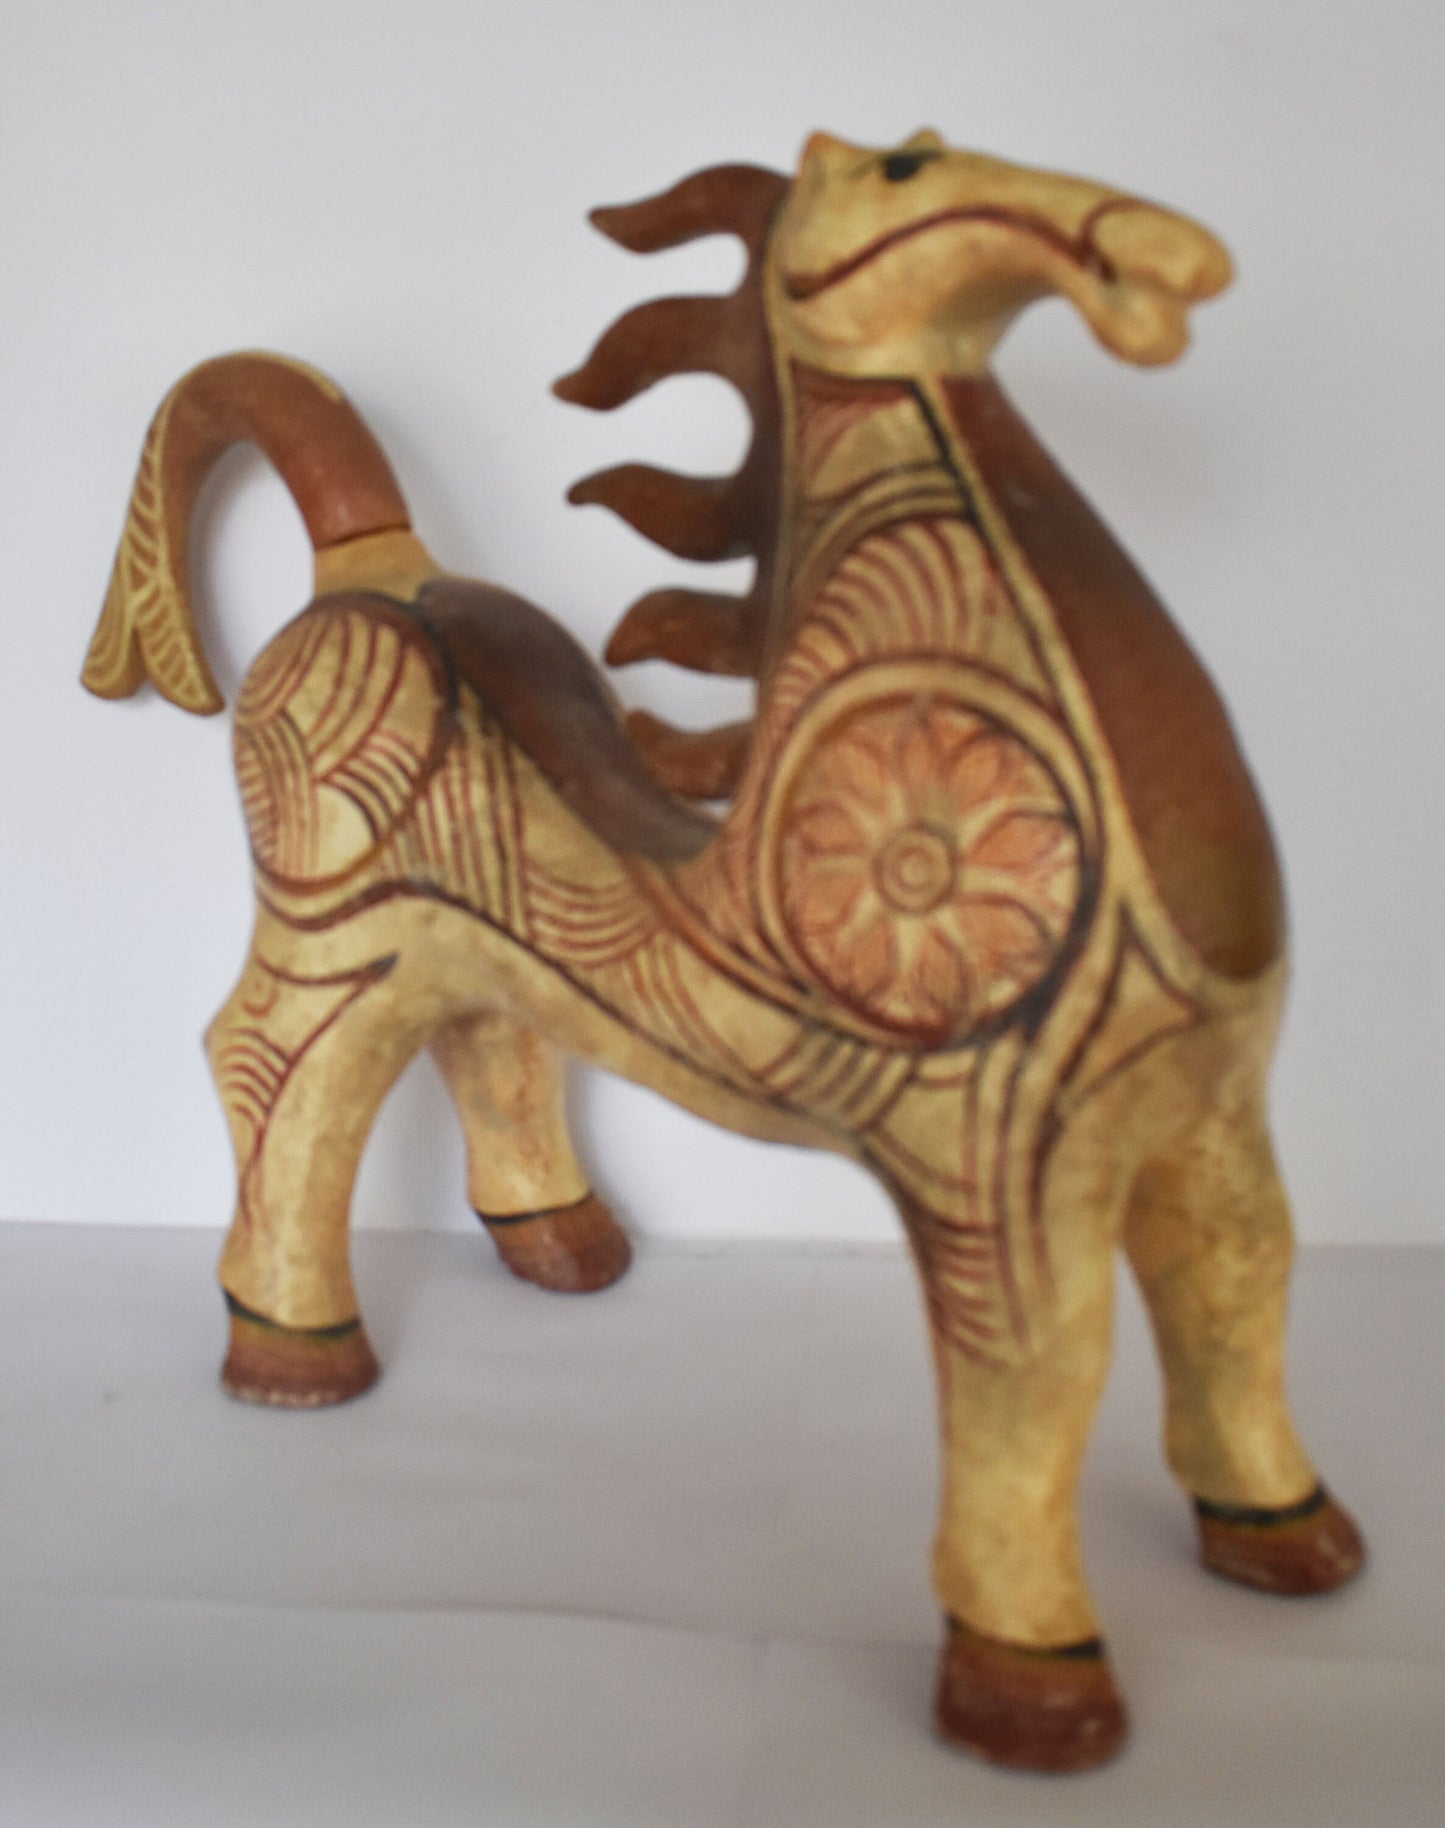 Mycenaean Horse - 1600–1100 BC - Symbol of Courage, Integrity, Power - Representation of Ancient Greek Vessel - Ceramic Artifact